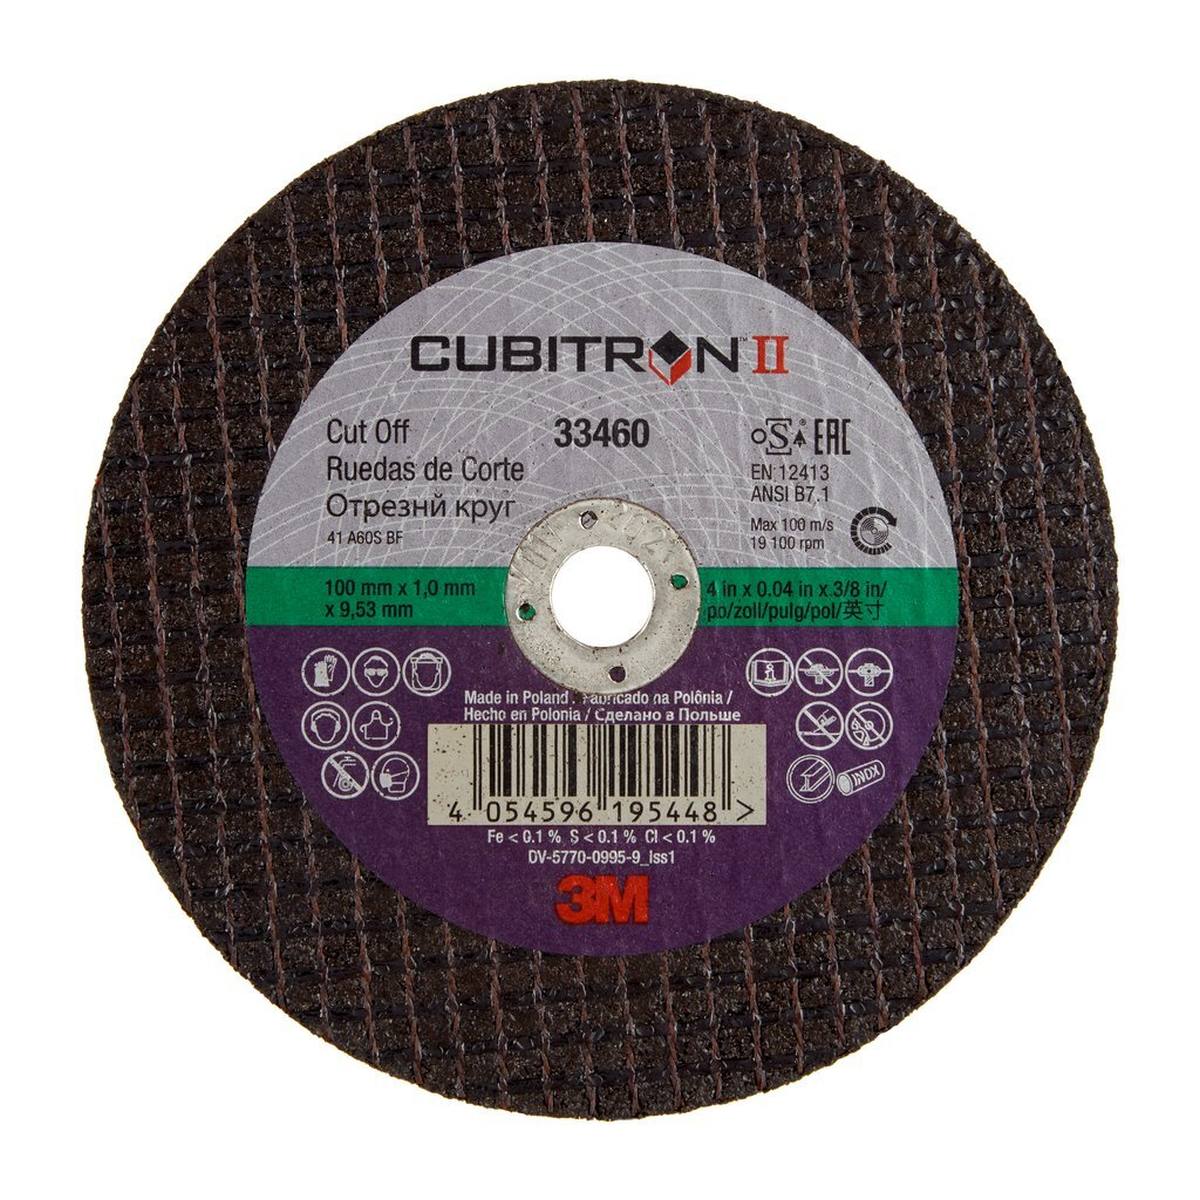 3M Cubitron II Discos de corte, 100 mm, 9,53 mm de agujero, 1 mm de grosor